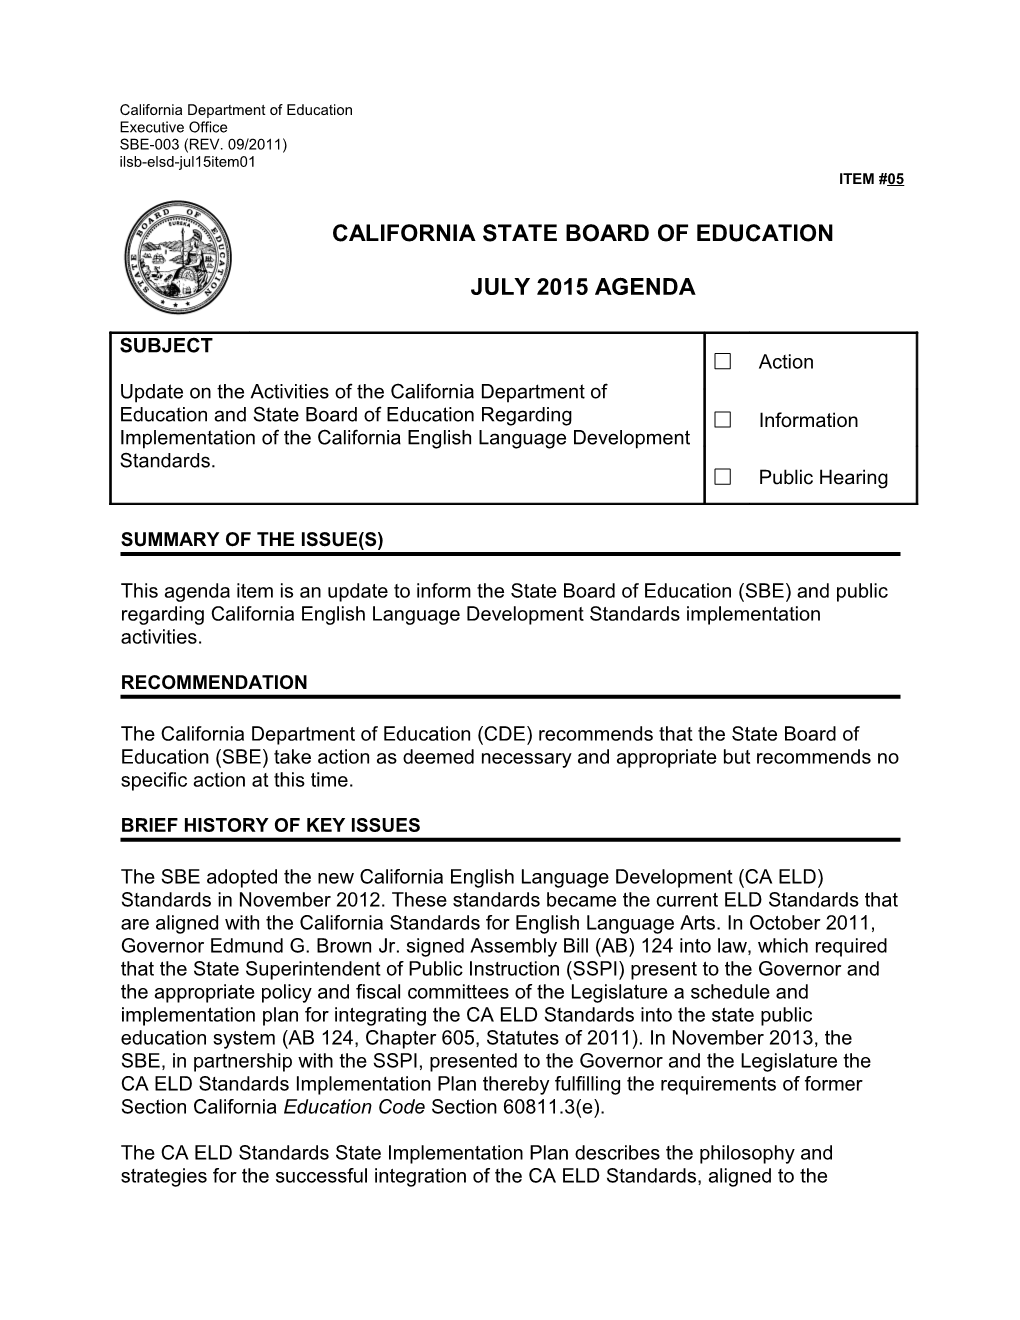 July 2015 Agenda Item 05 - Meeting Agendas (CA State Board of Education)